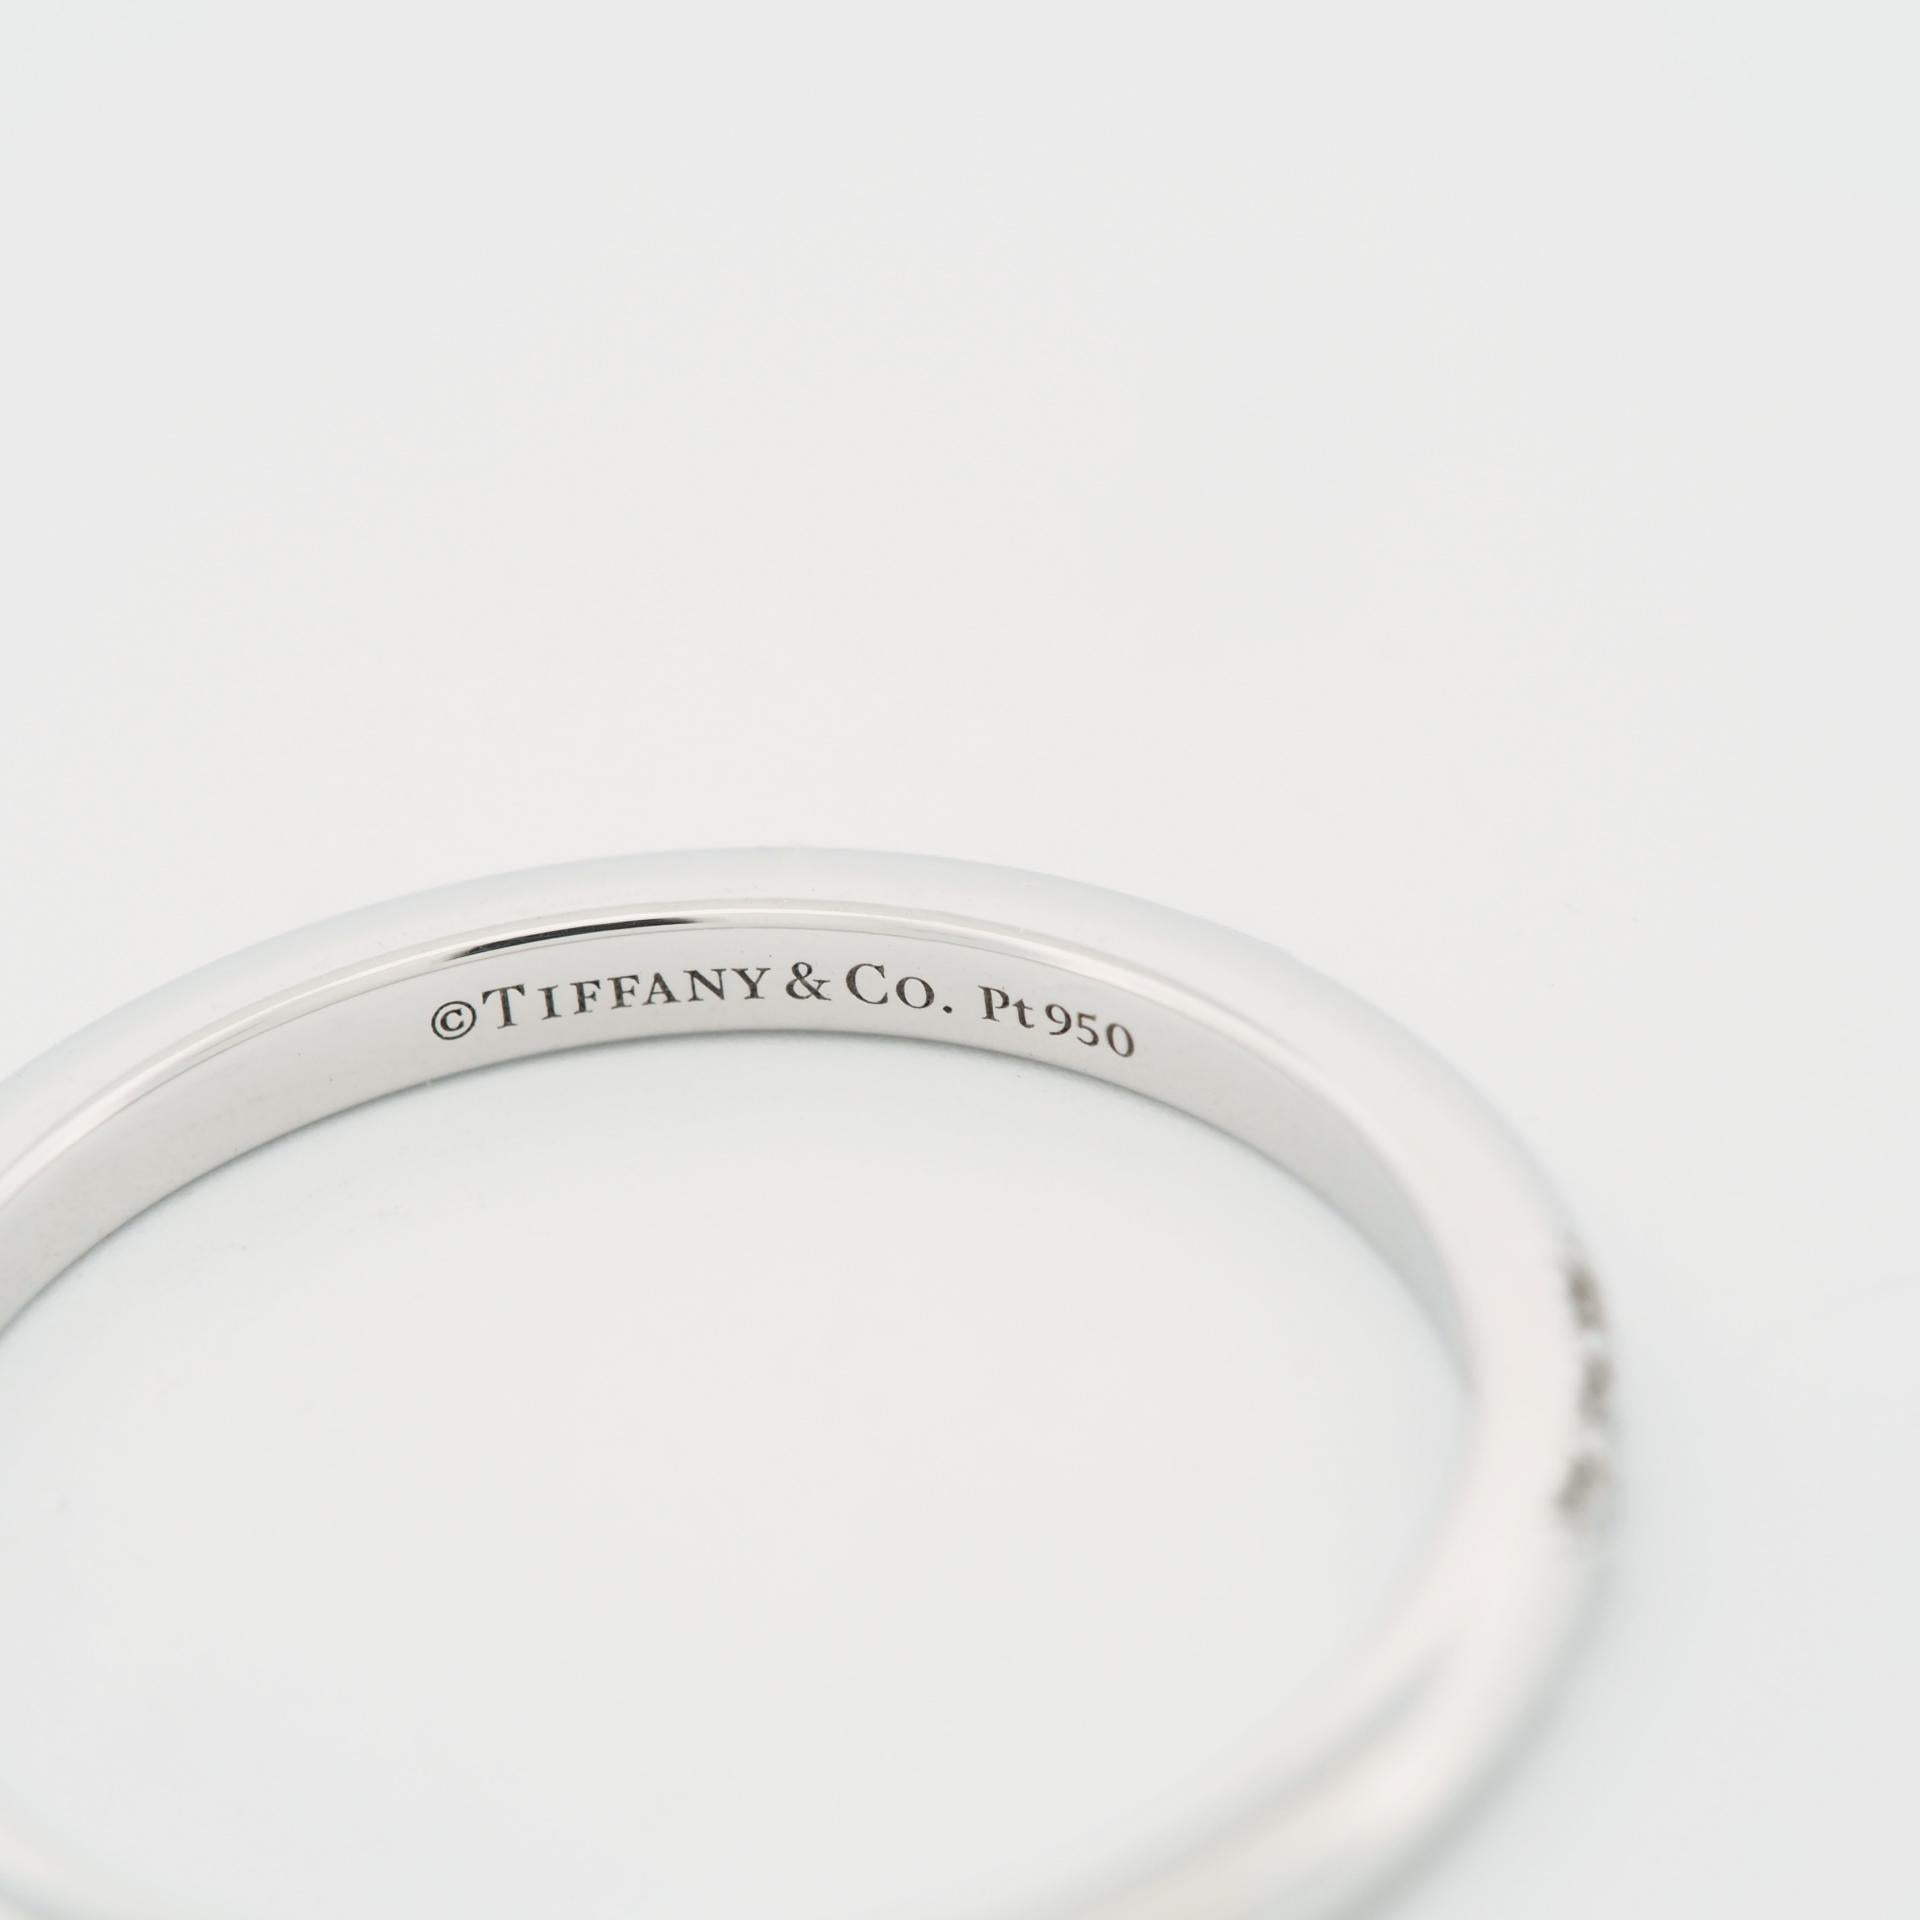 Tiffany & Co. 3 Diamonds Forever Wedding Band Ring Platinum 950 1